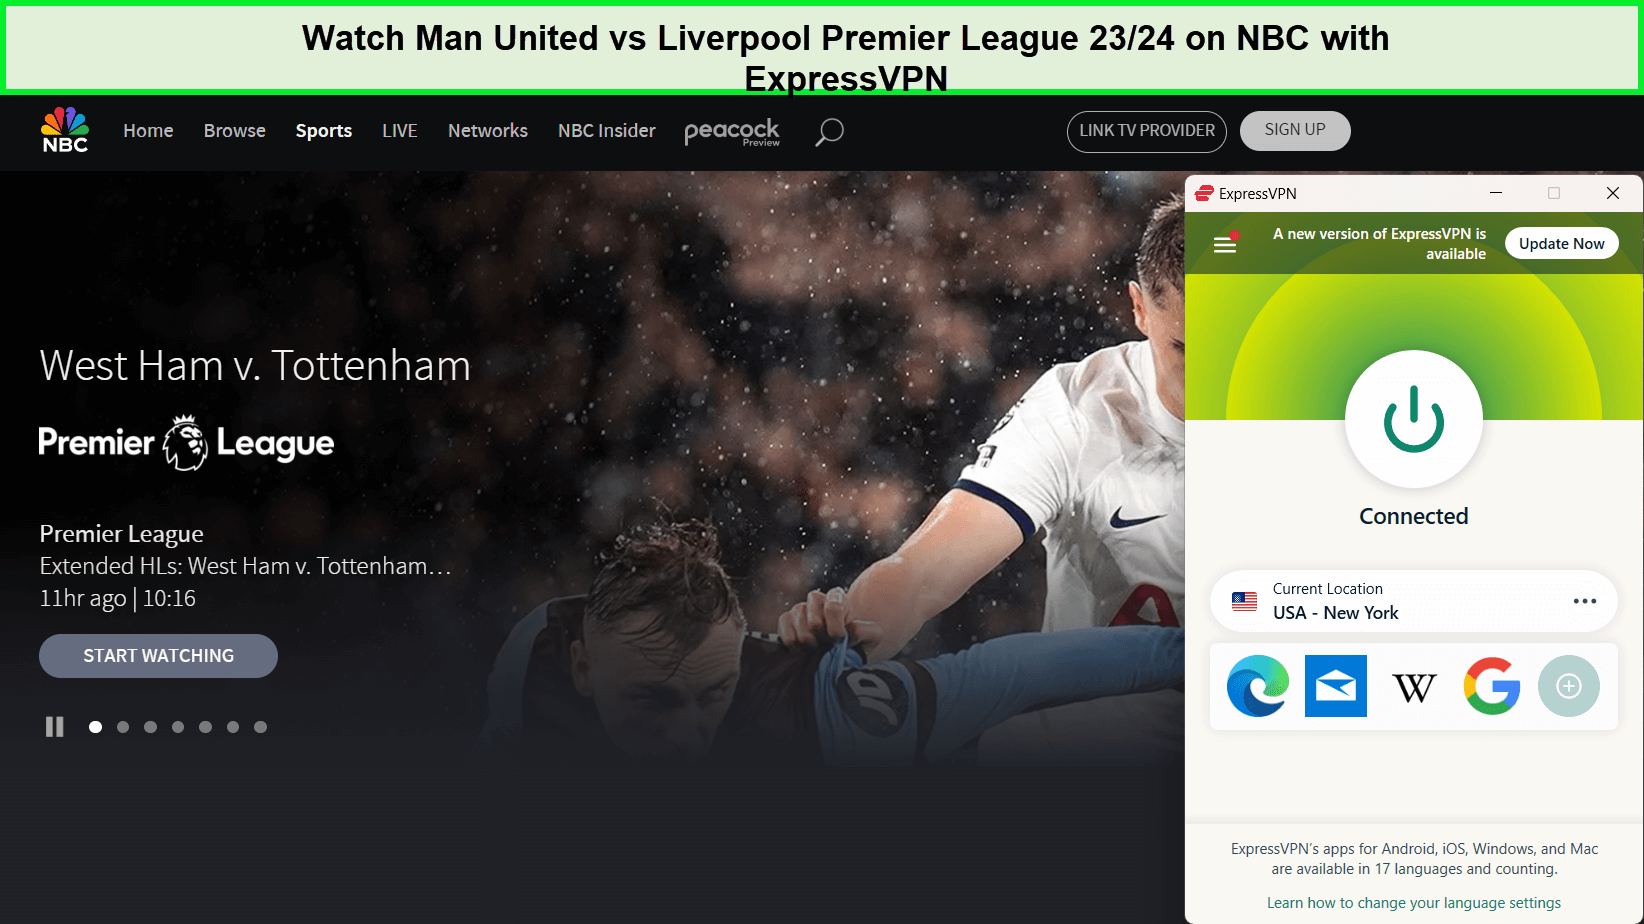 Watch-Man-United-vs-Liverpool-Premier-League-23-24-in-Australia-on-NBC